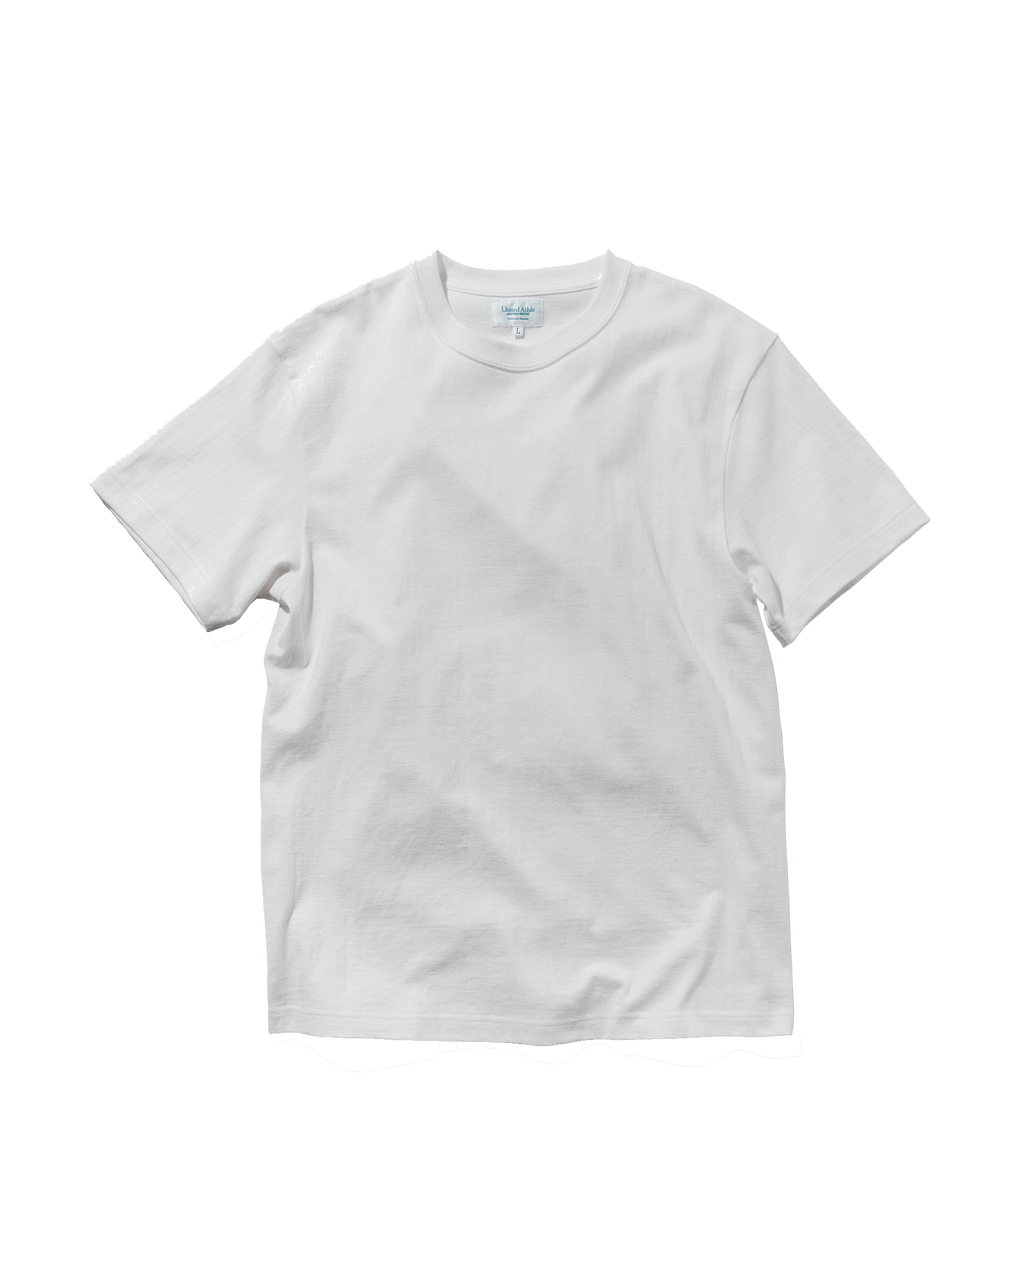 80001 - Japan Made - Standard Fit Short Sleeve T-shirt - White x 1